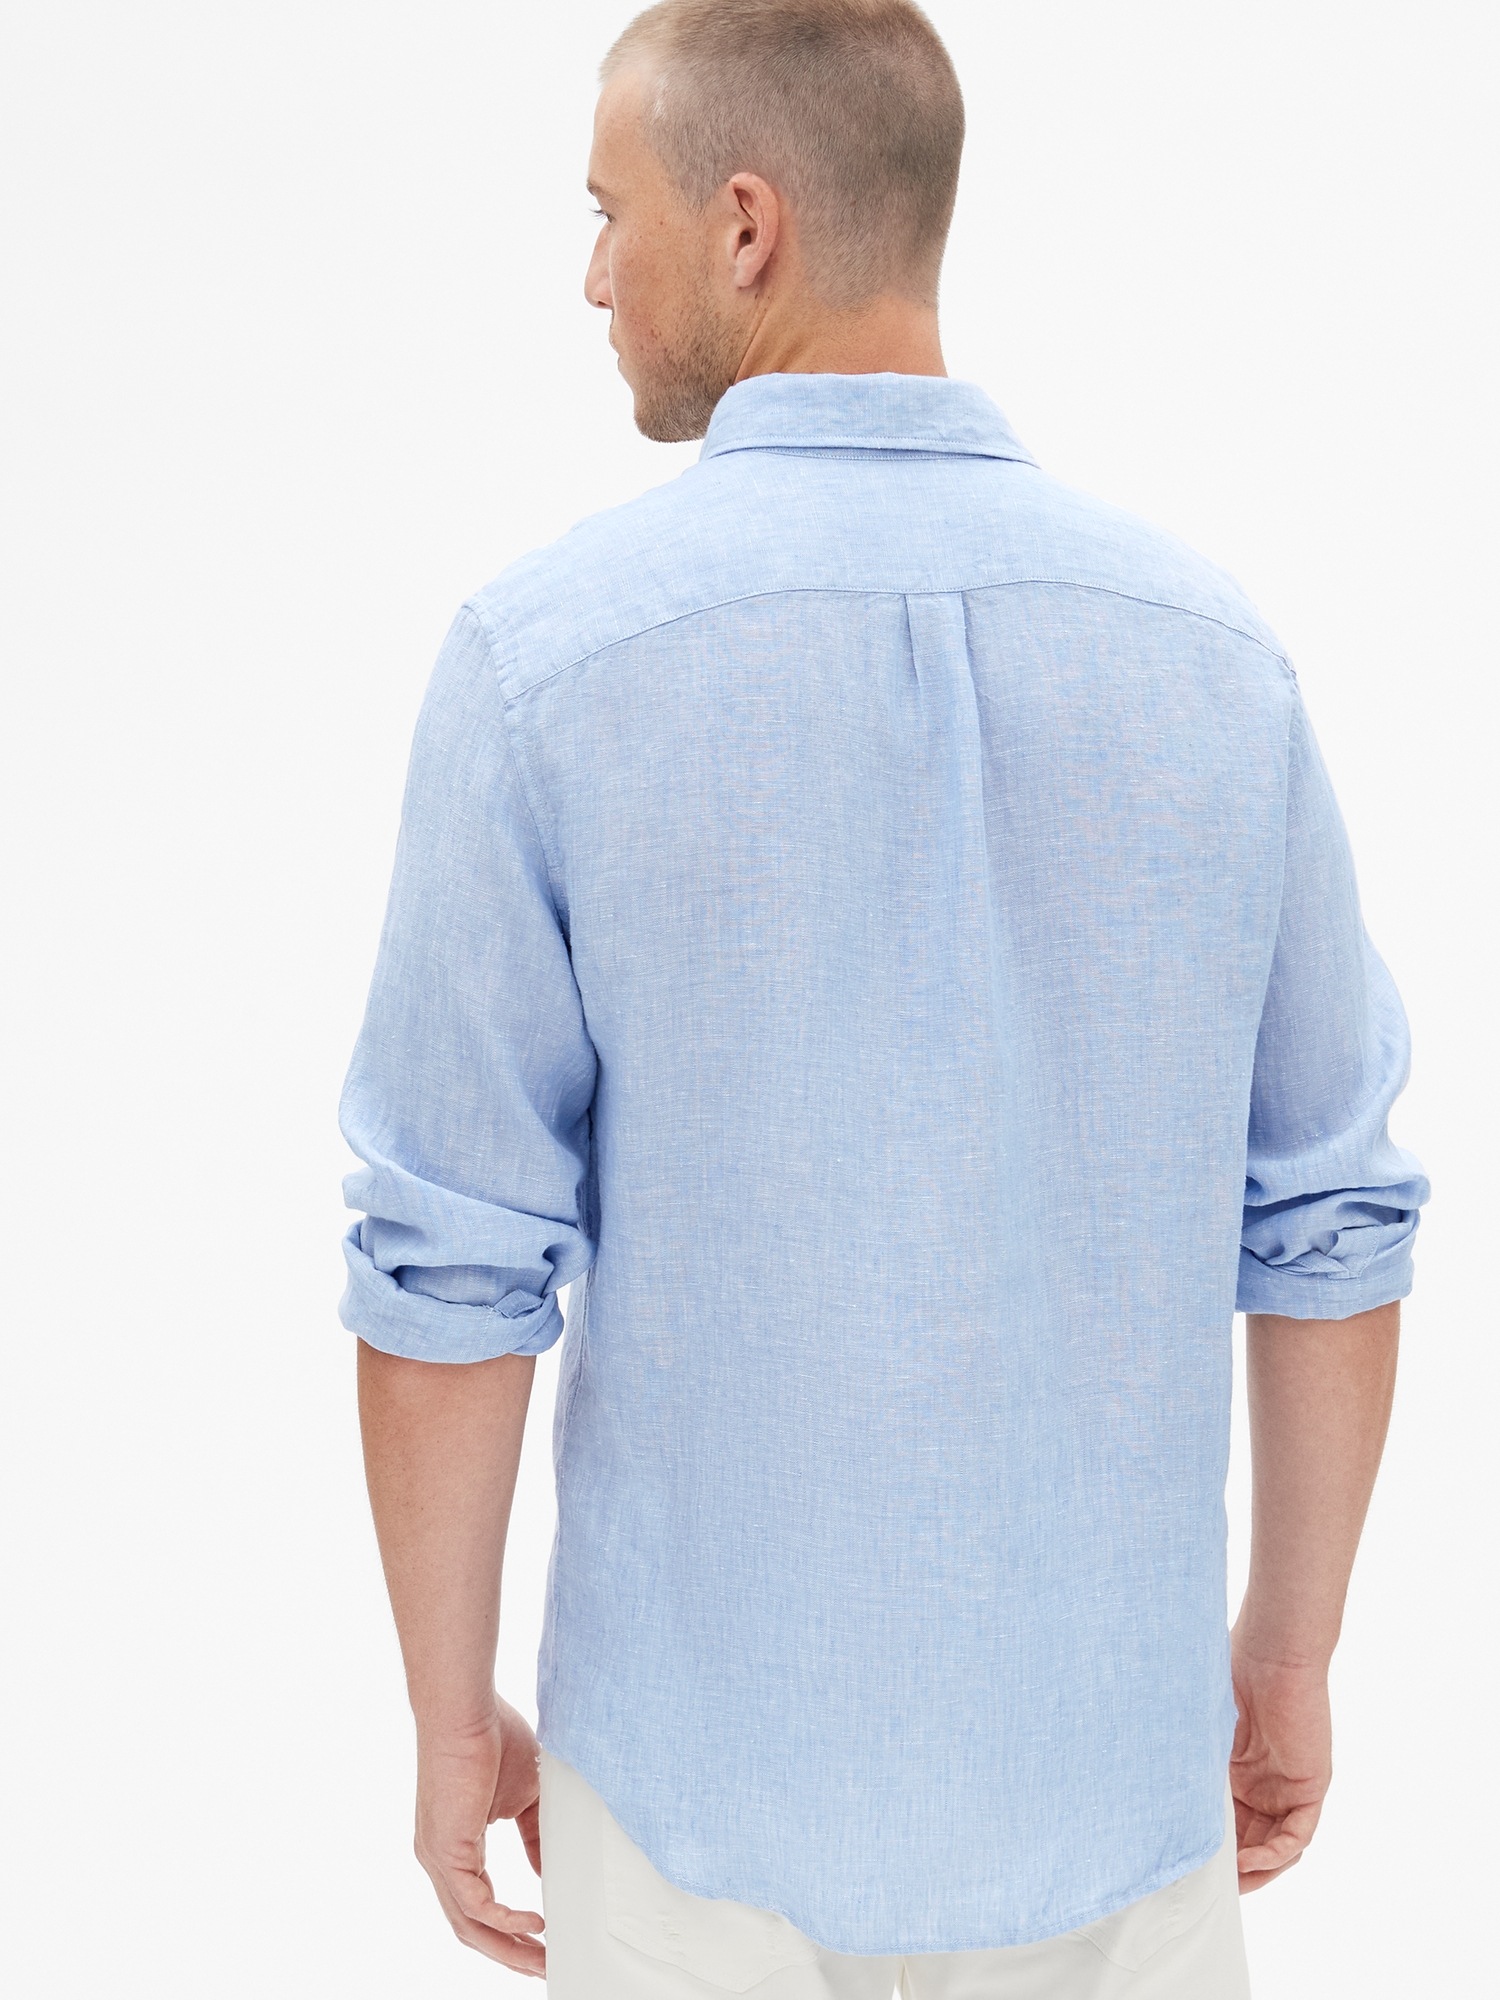 Gap Linen Easy Shirt. NWOT Size S